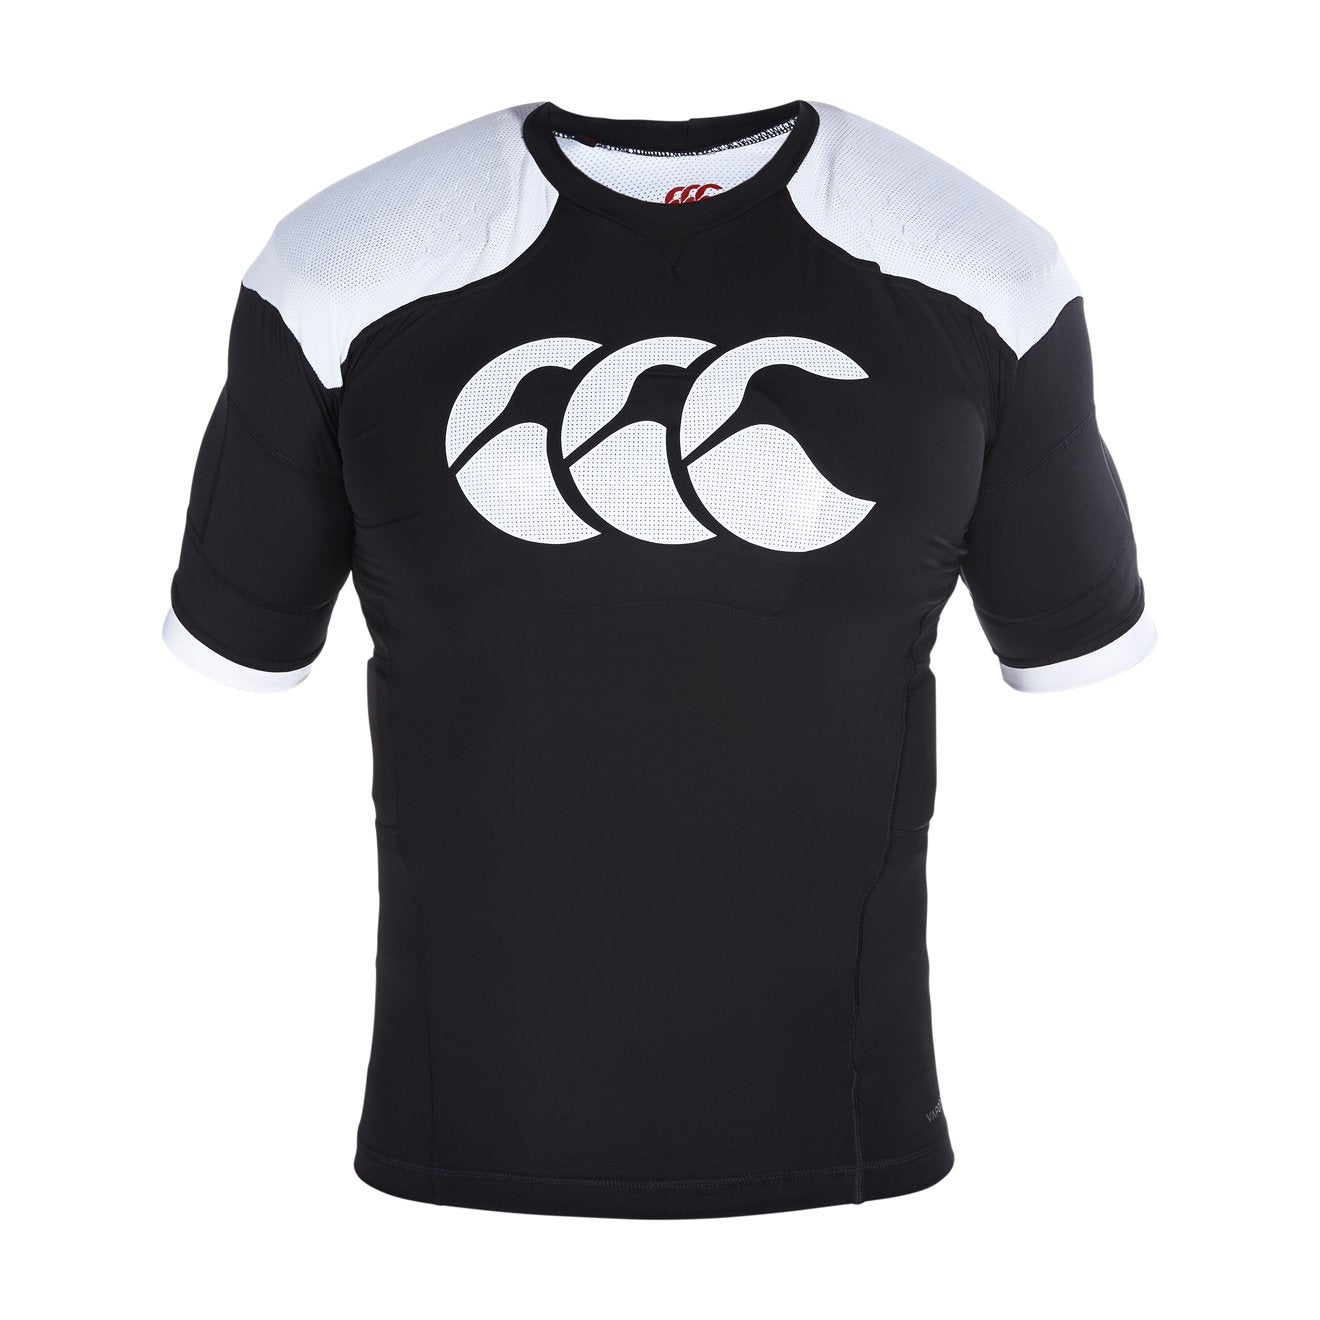 Canterbury Rugby VapoDri Raze Pro Vest Body Armor Top, Black/White